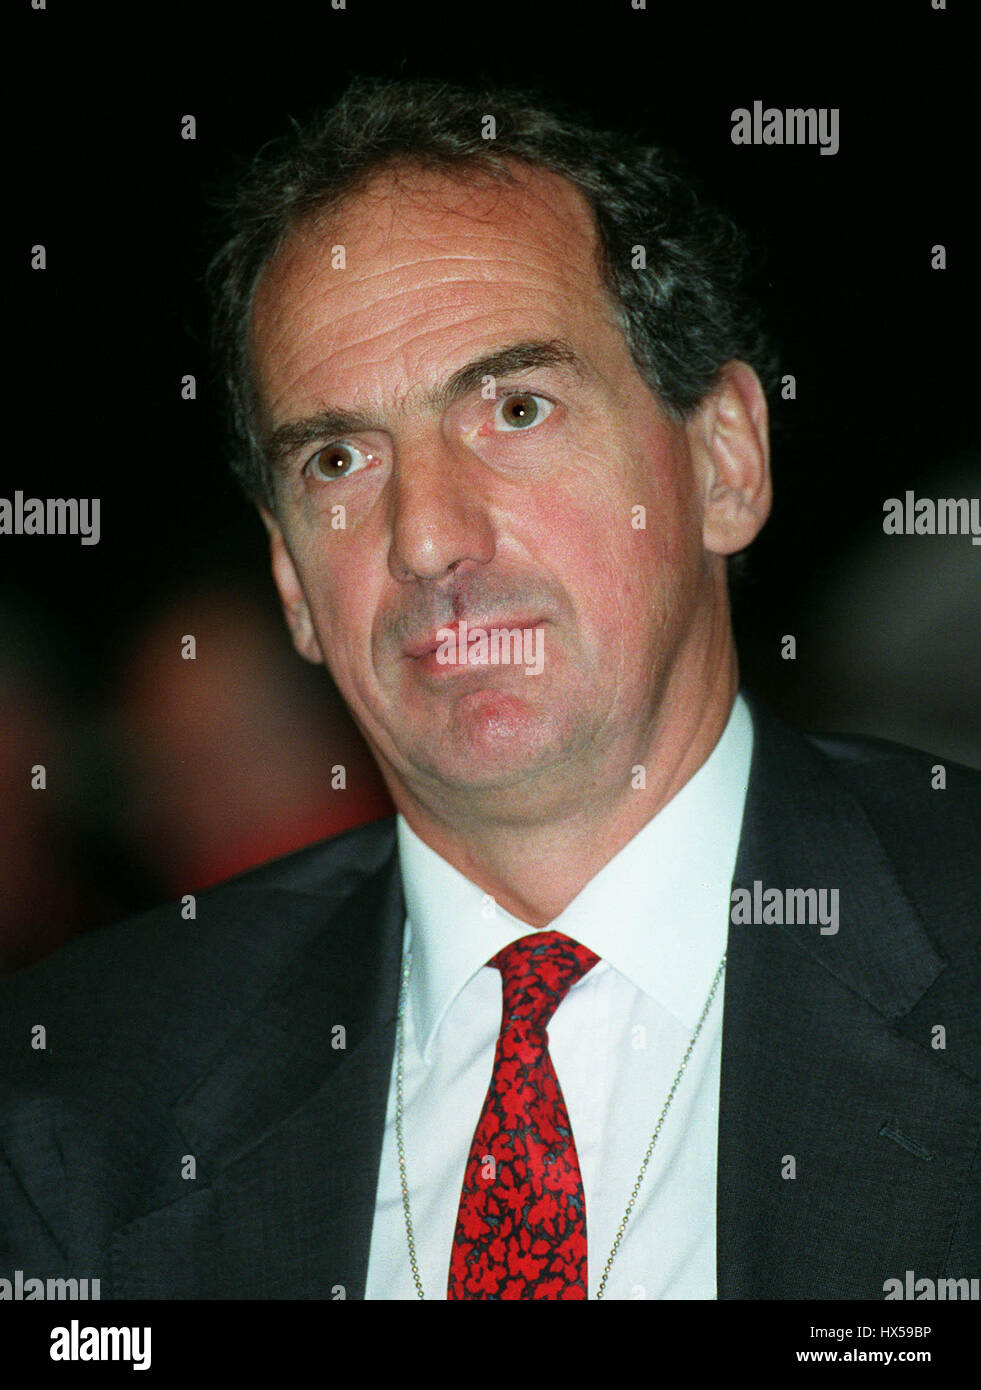 KIM HOWELLS MP LABOUR PARTY PONTYPRID 31 October 1997 Stock Photo